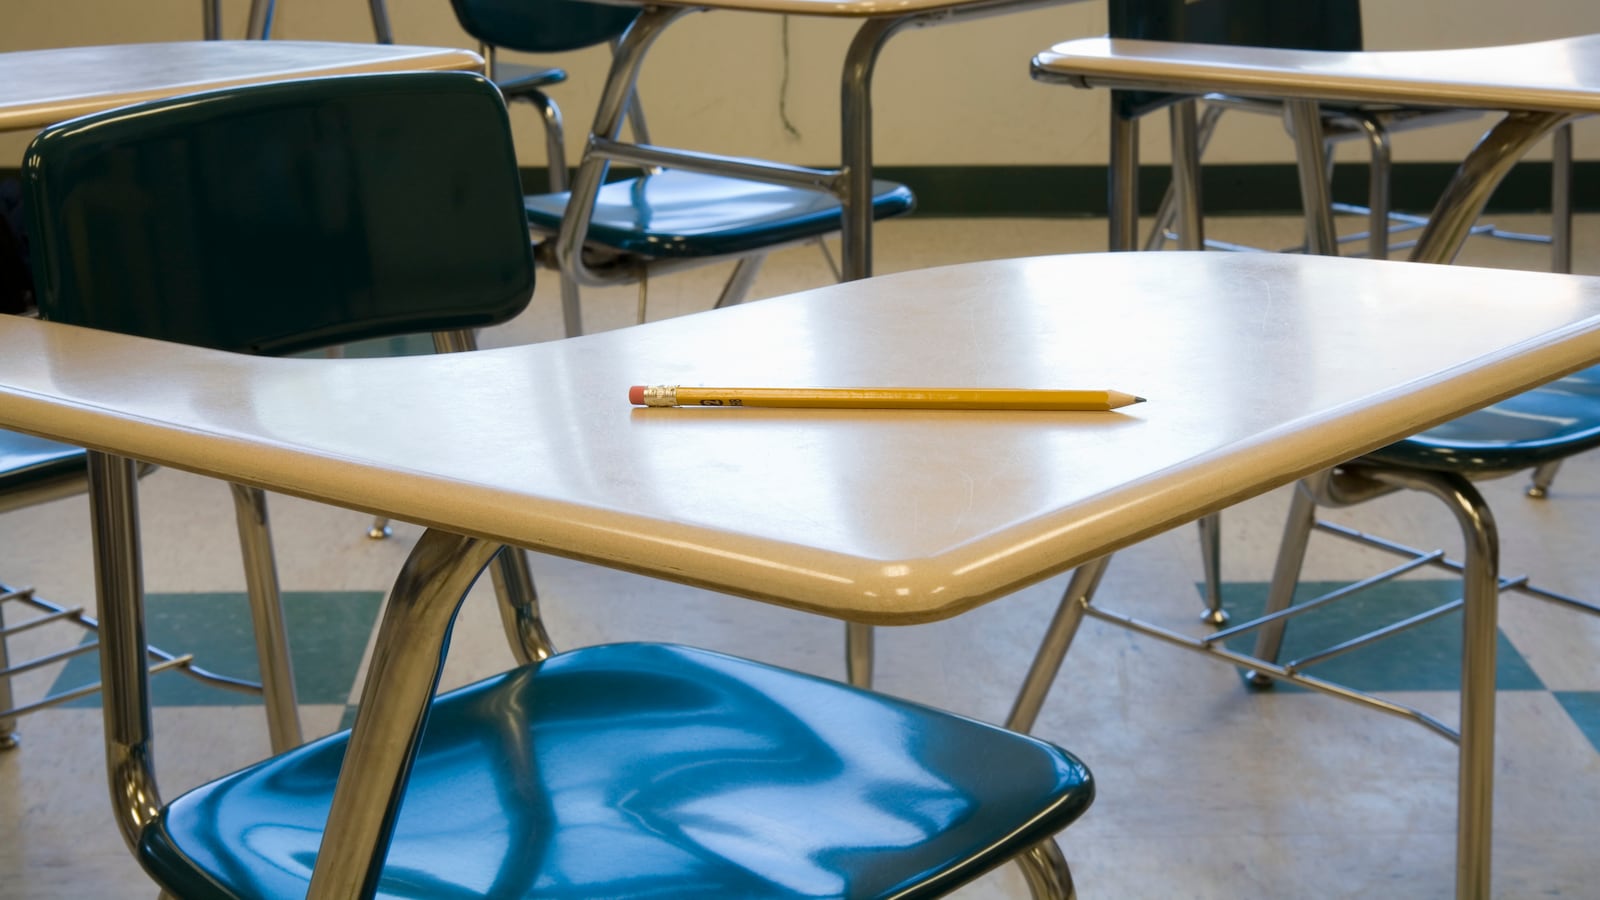 A pencil on a wooden school desk in an empty classroom.